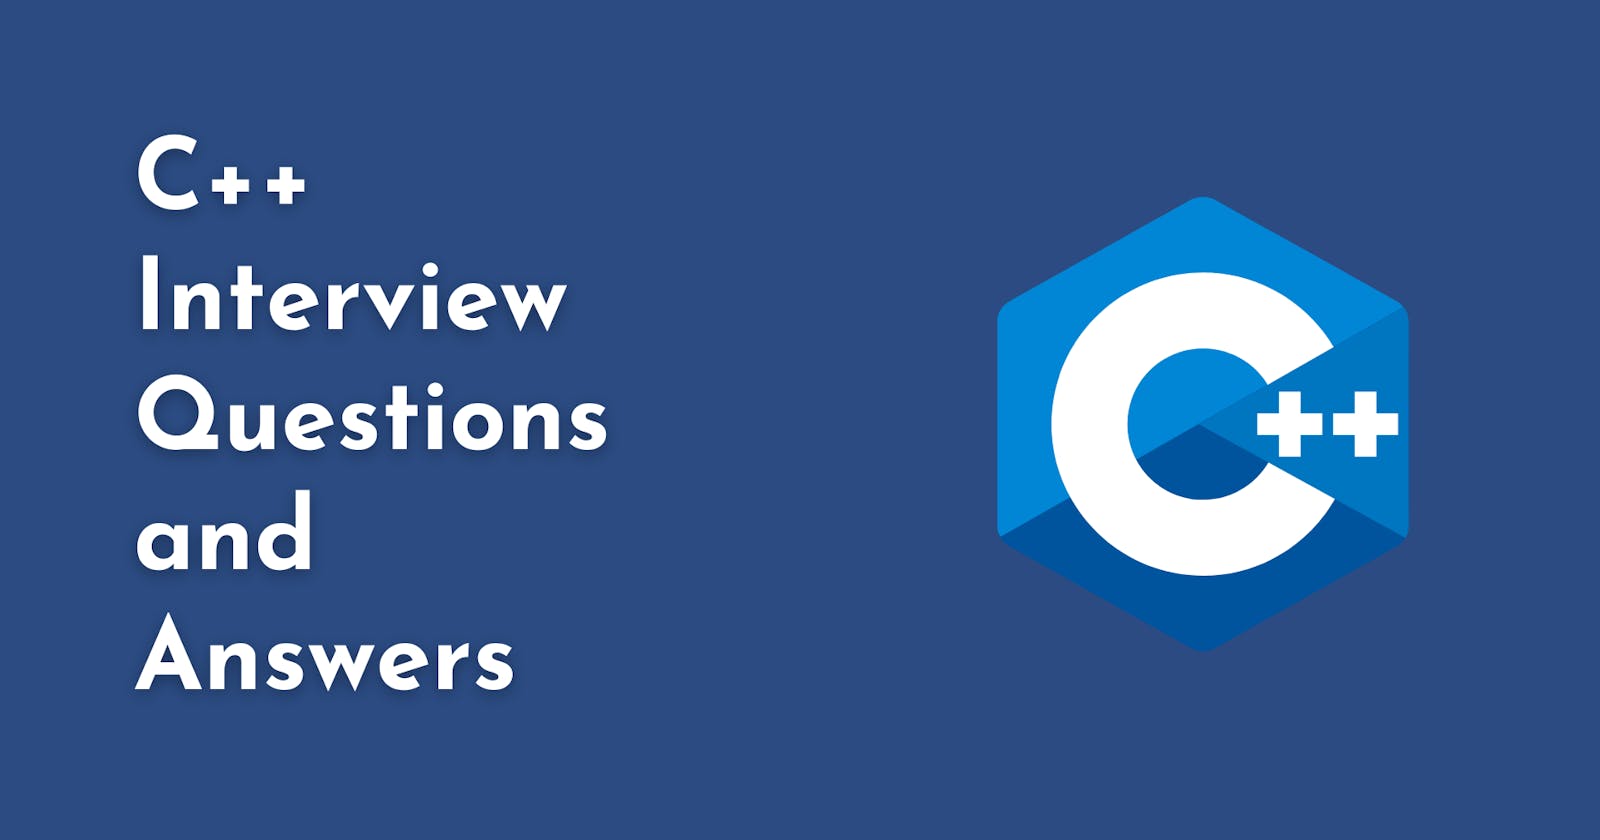 50 Best C++ Interview Questions for C++ Job Interviews